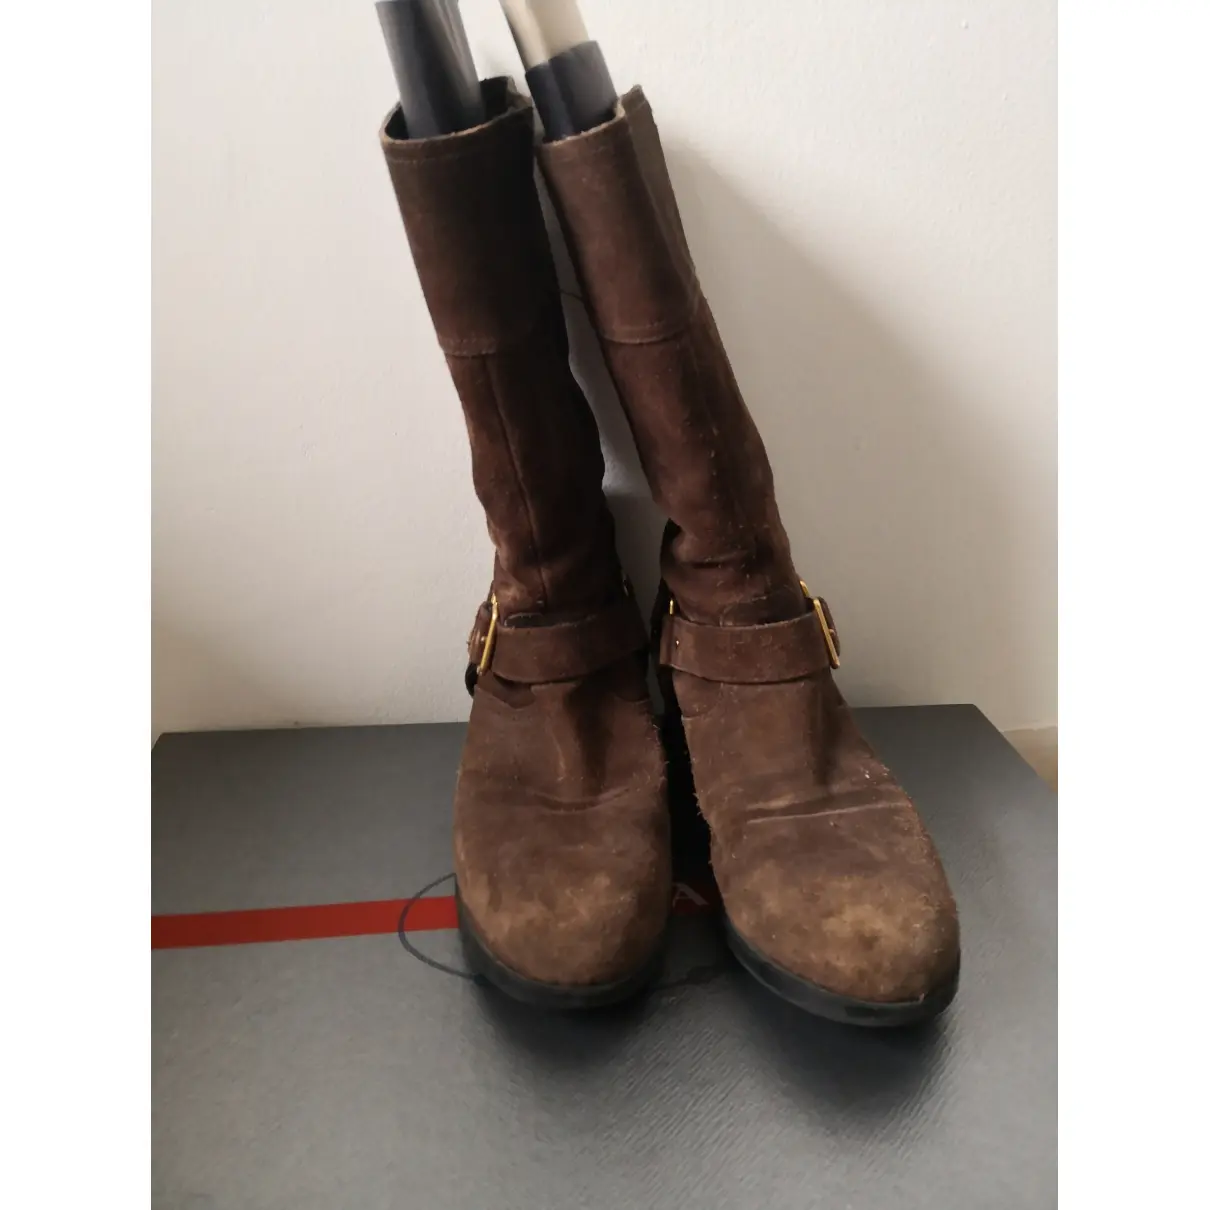 Buy Prada Riding boots online